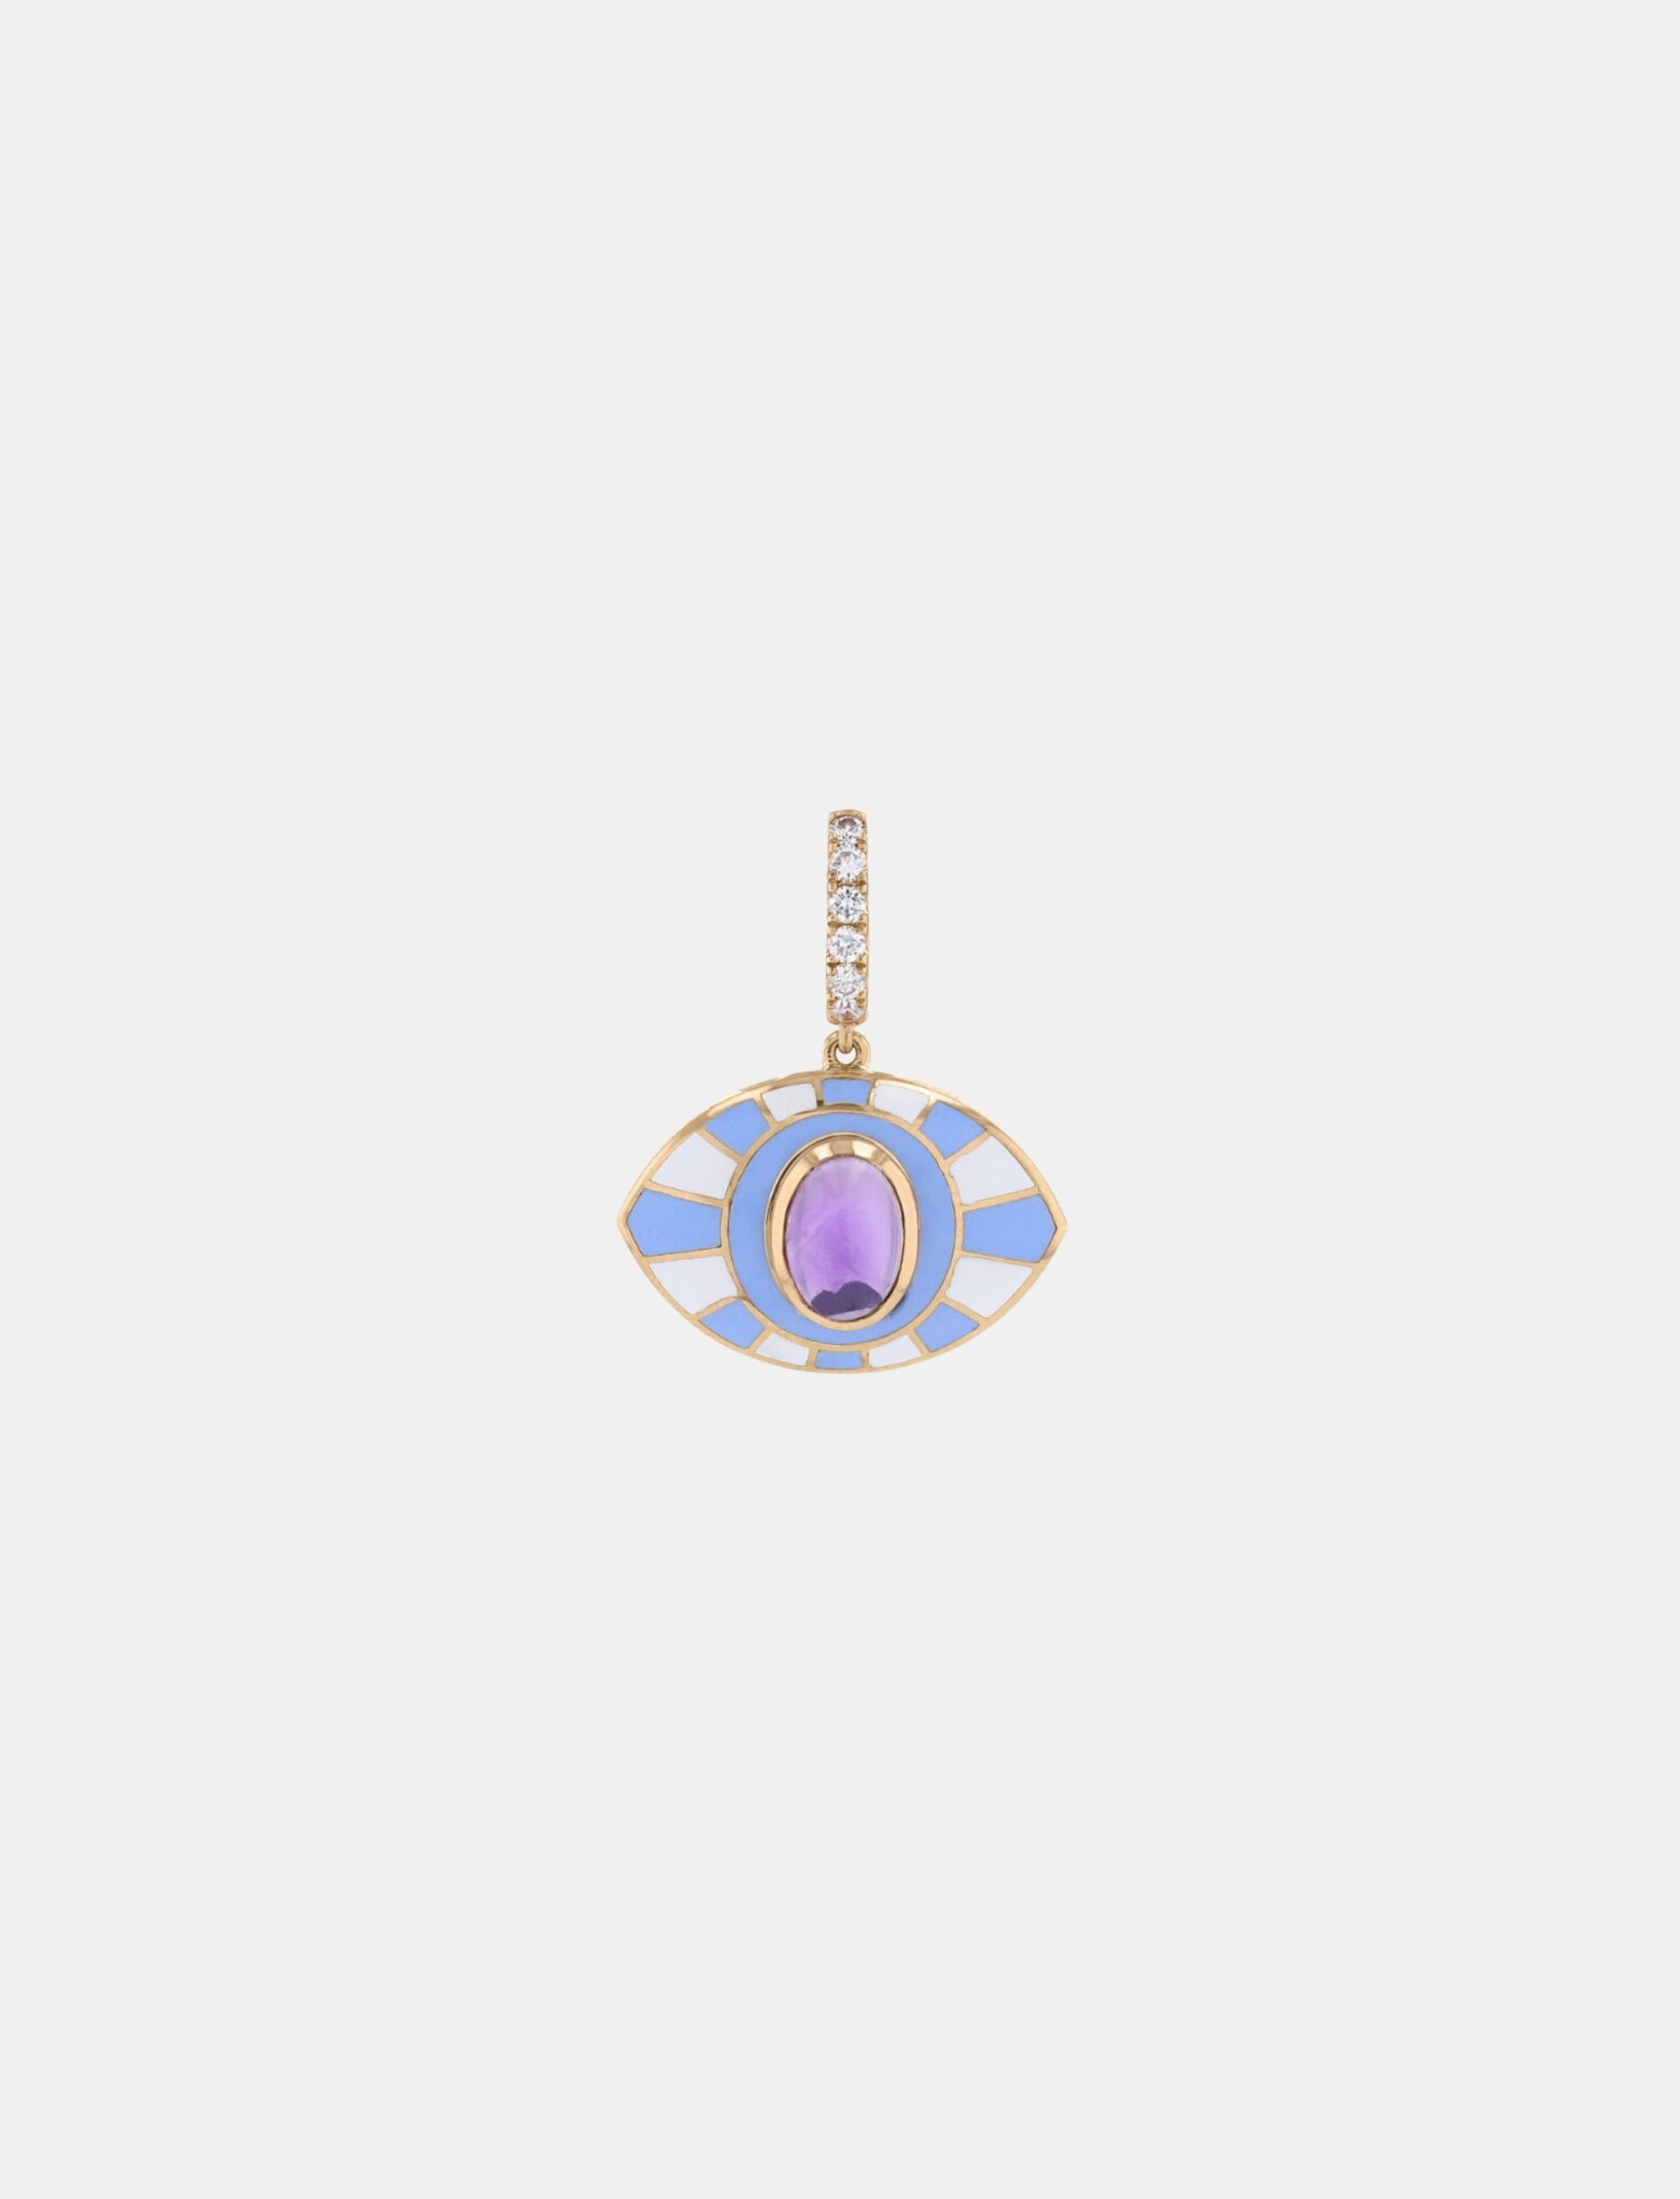 The Lilac-Art Deco Pendant